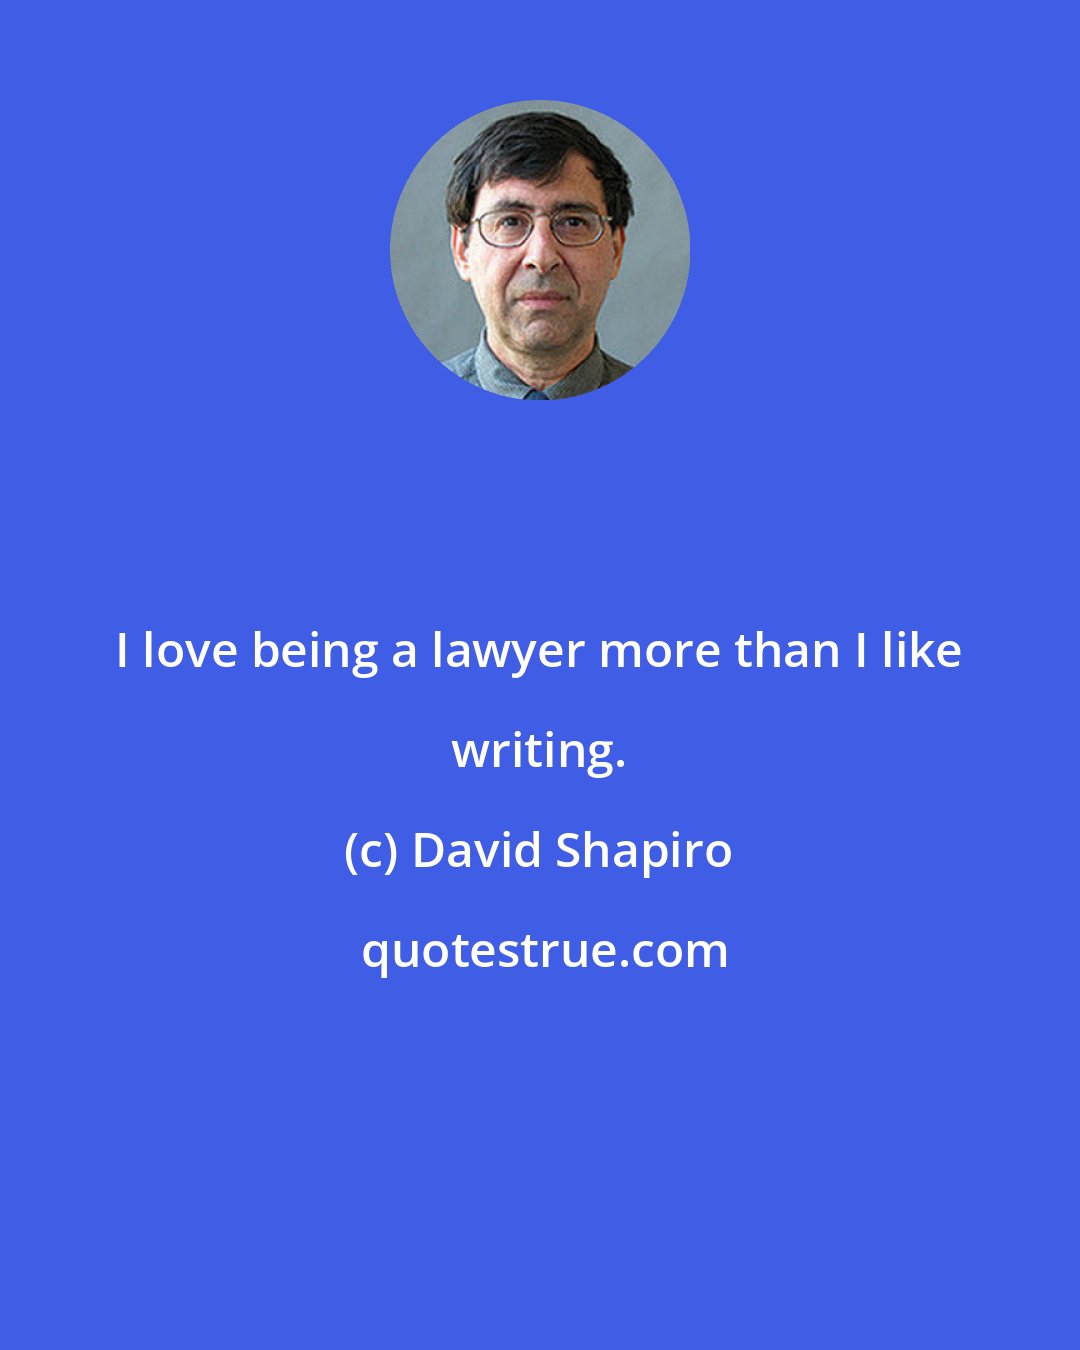 David Shapiro: I love being a lawyer more than I like writing.